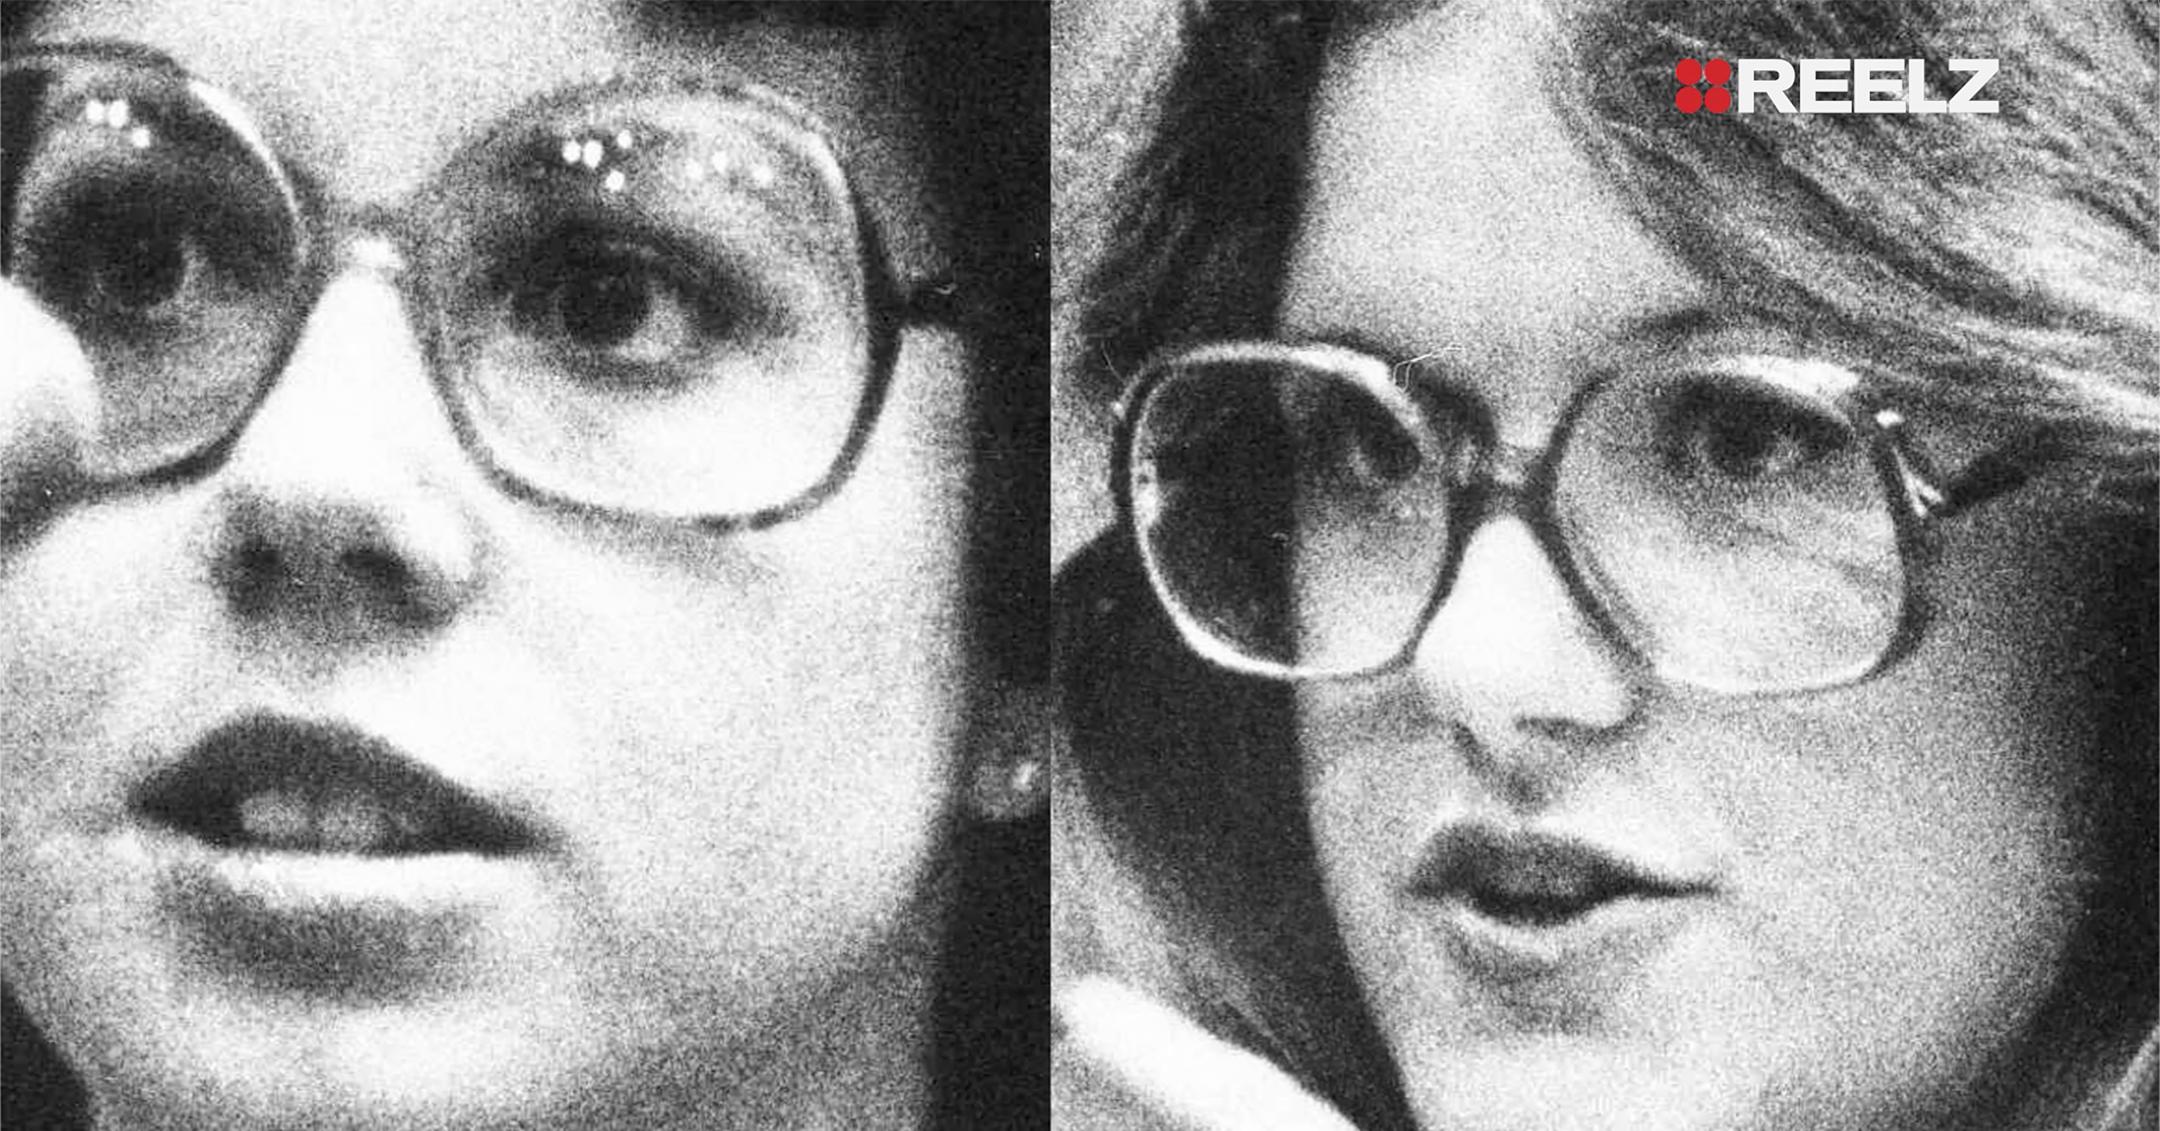 serial killer ted bundys survivors are profiled in reelz crime documentary ok